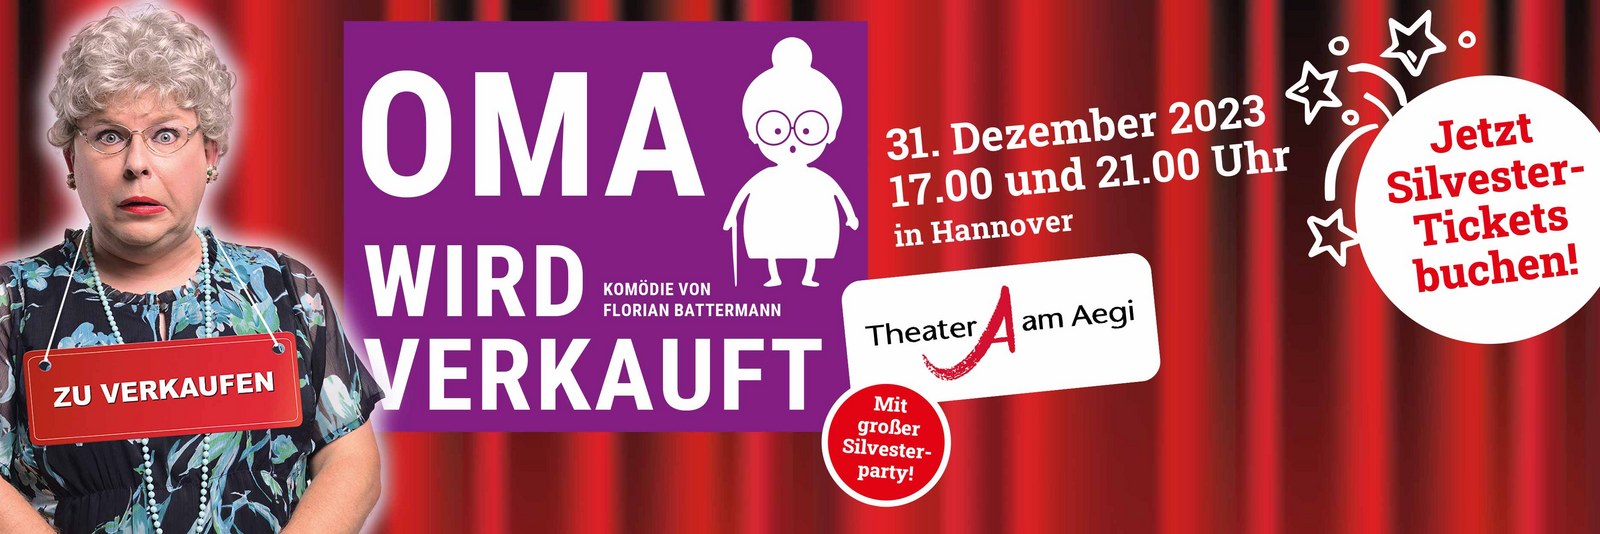 Silvester-Tickets online unter www.neuestheater-hannover.de